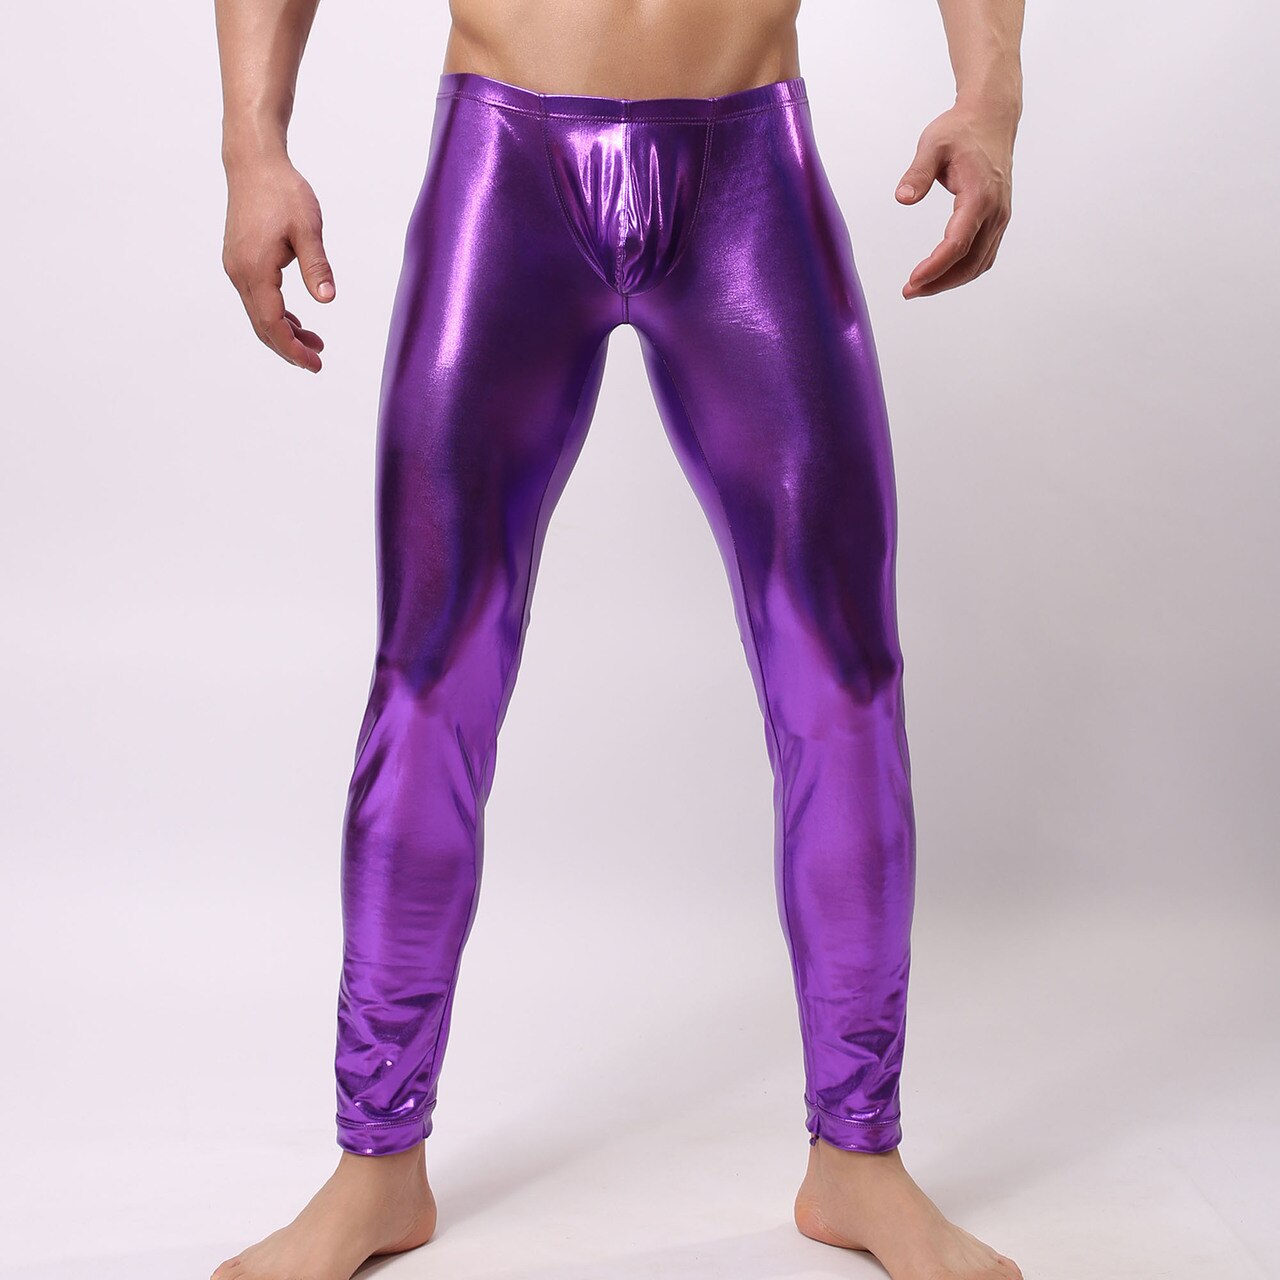 SALE - Mens Stretch Shiny Metallic Long Tights Purple